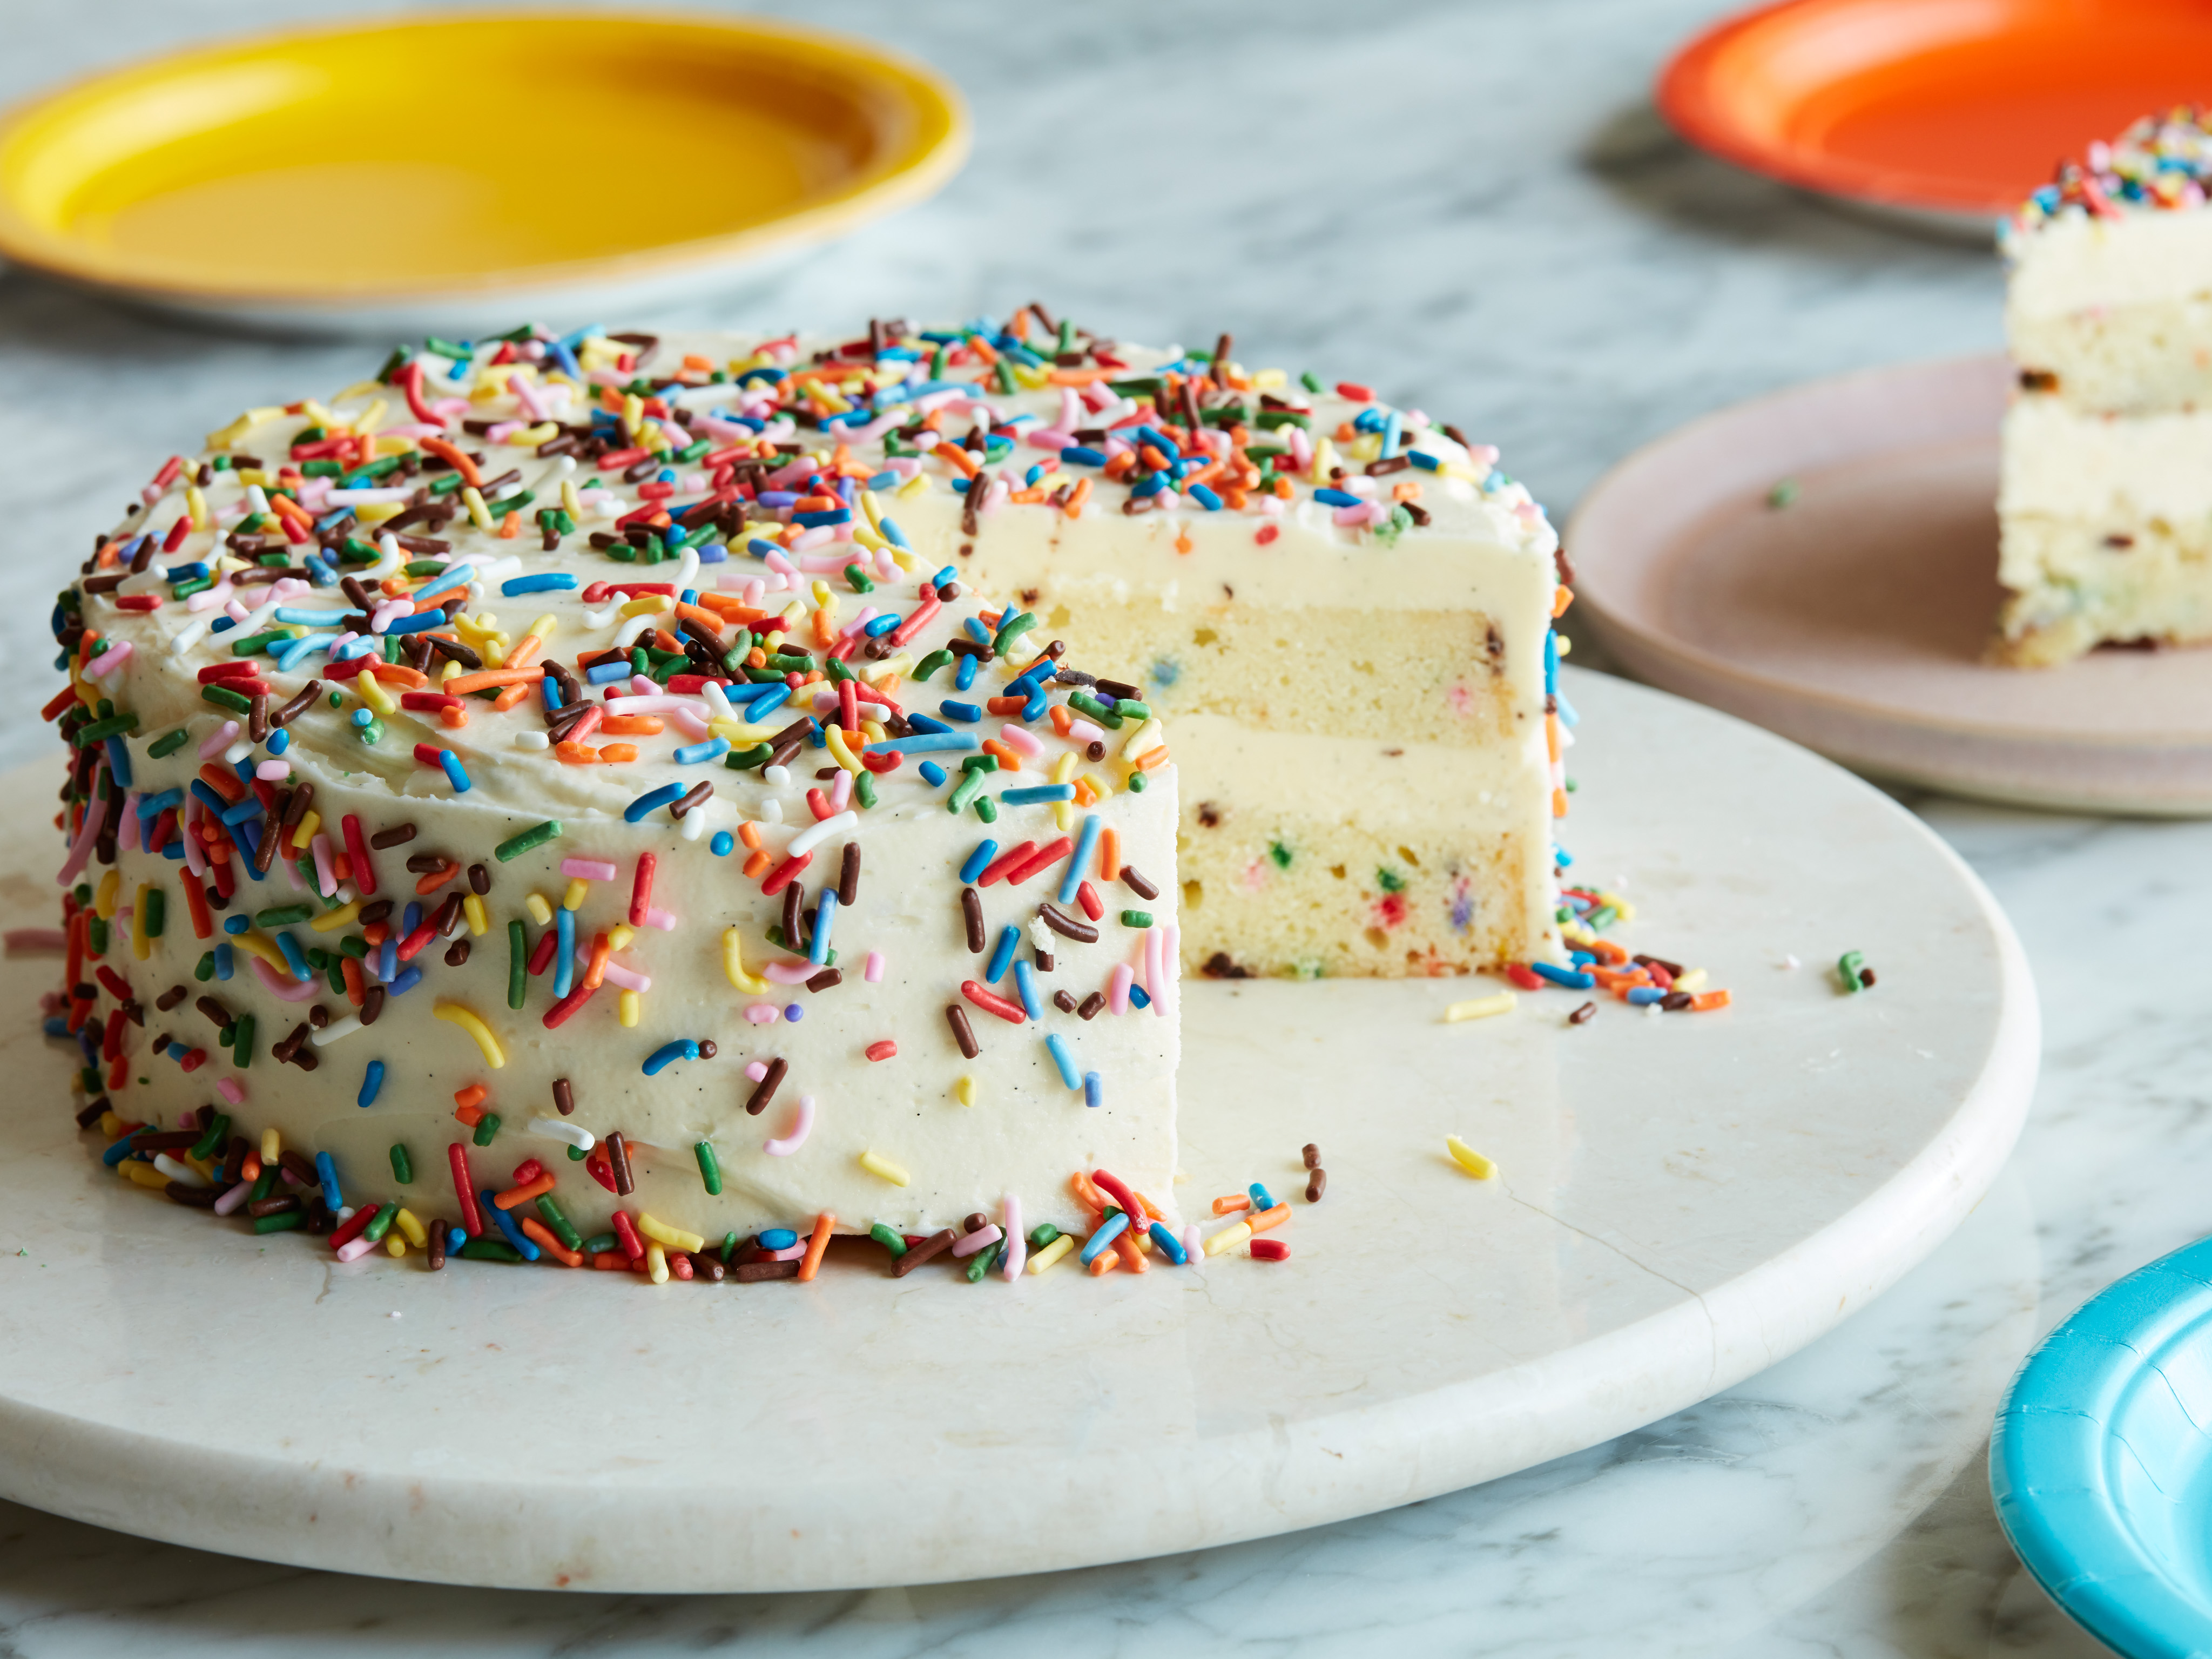 Birthday cake recipes to spoil someone special | Australia's Best Recipes